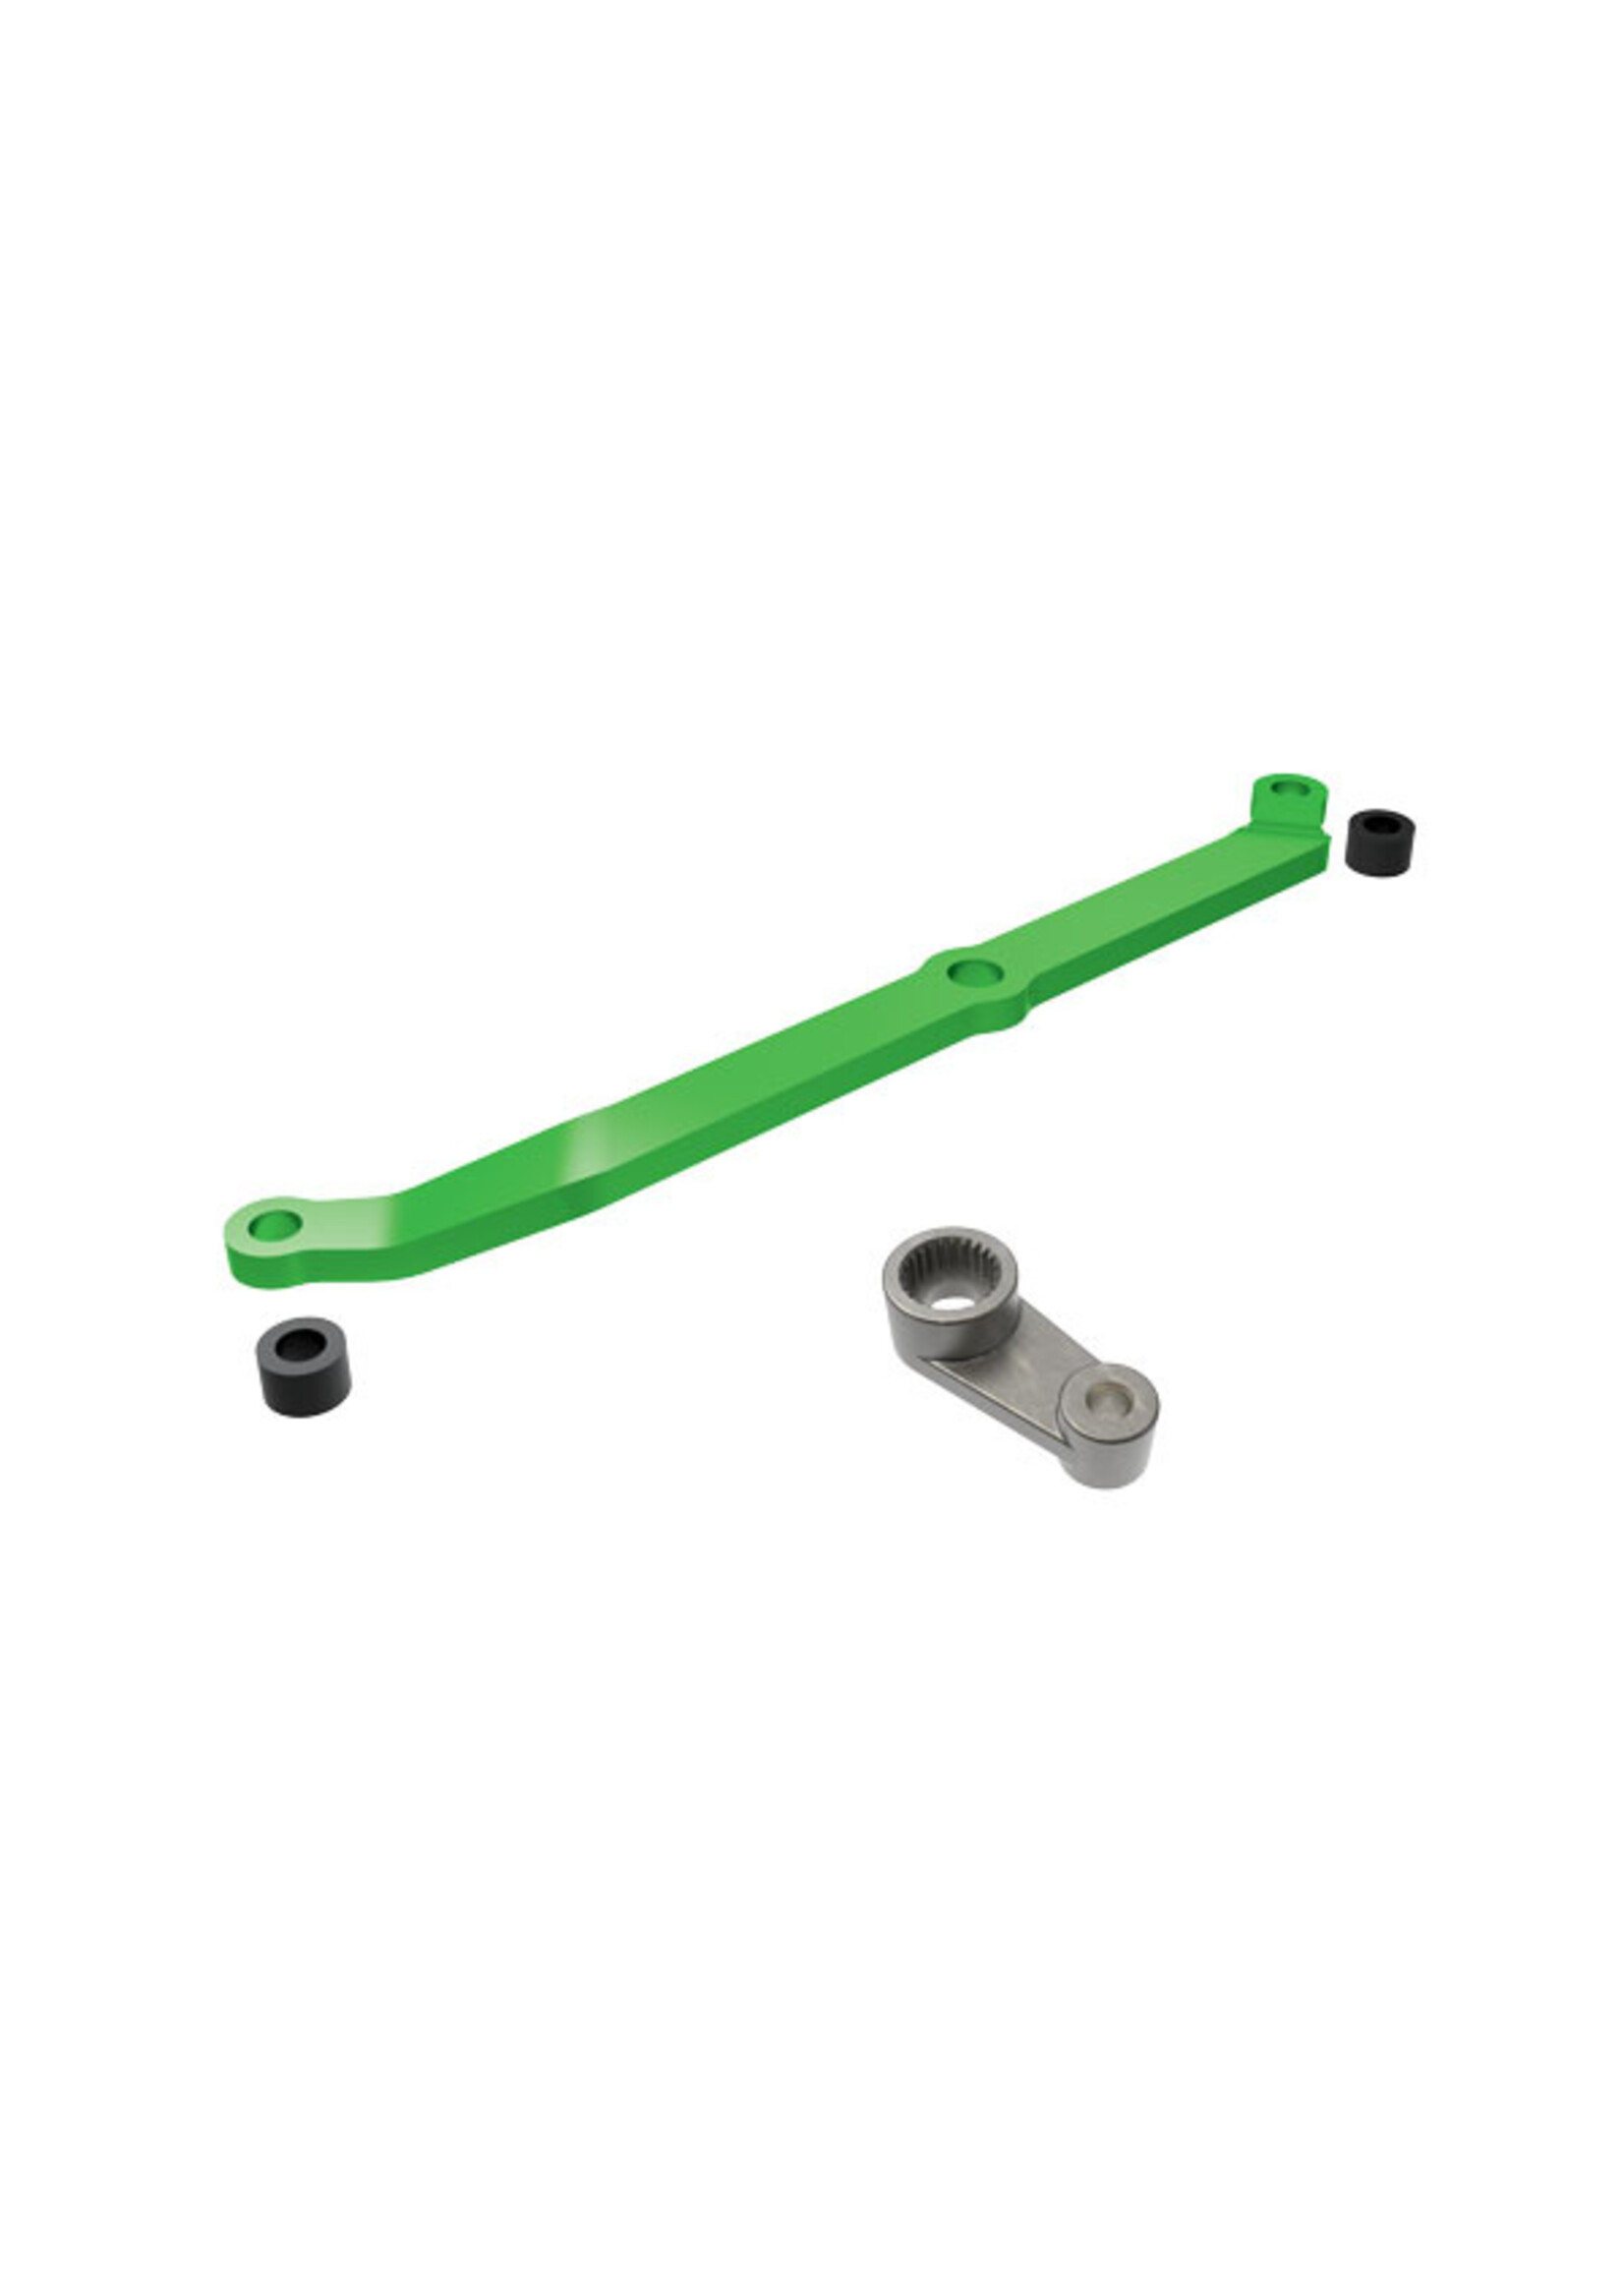 Traxxas 9748-GRN- Aluminum Steering Link & Servo Horn - Green